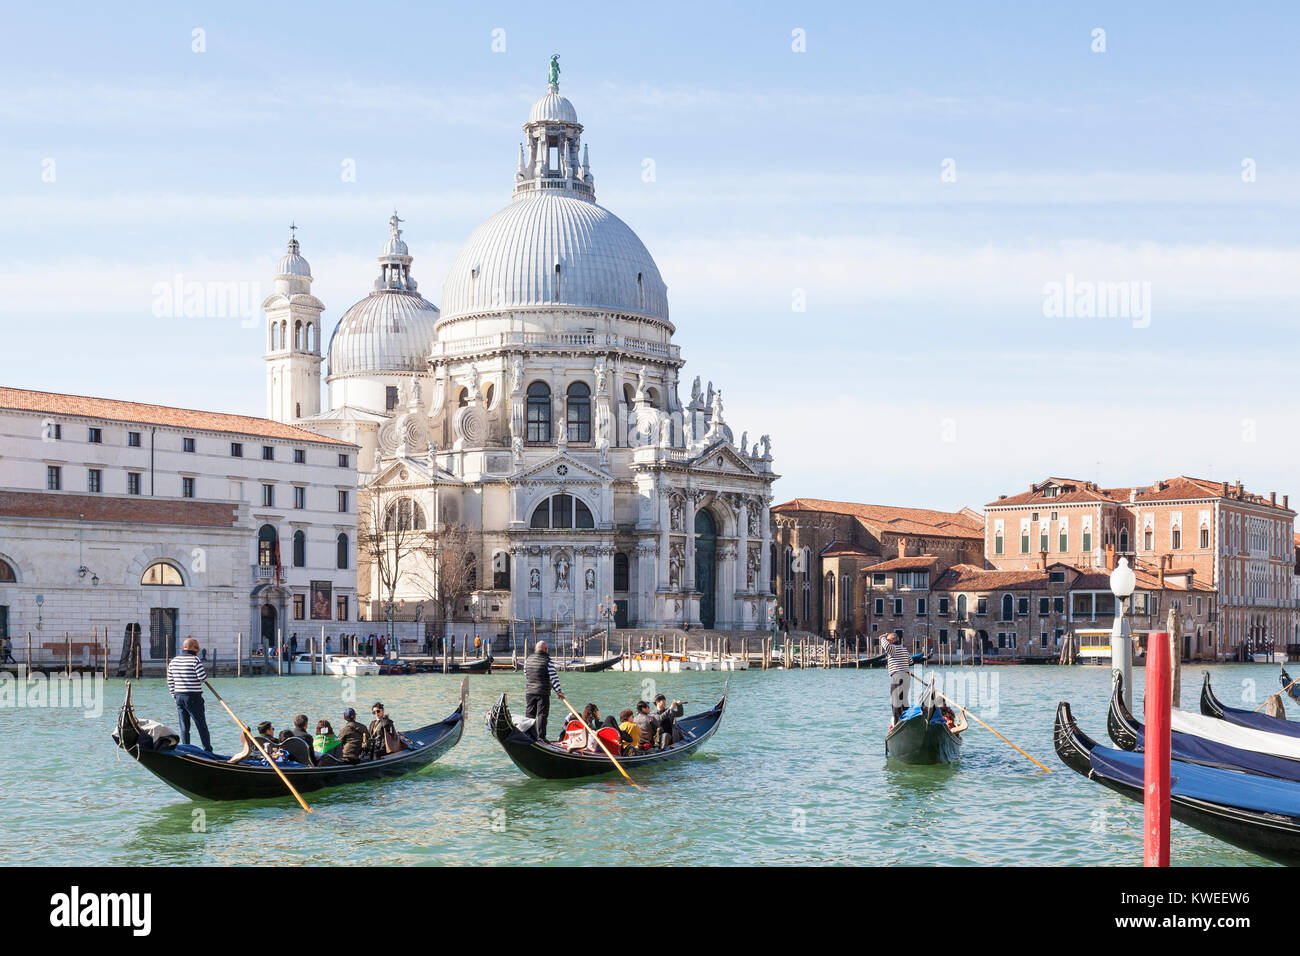 Gondolas with Asian tourists on the Grand Canal in front of Basilica di Santa Maria della Salute, Venice, Italy on a winter morning Stock Photo